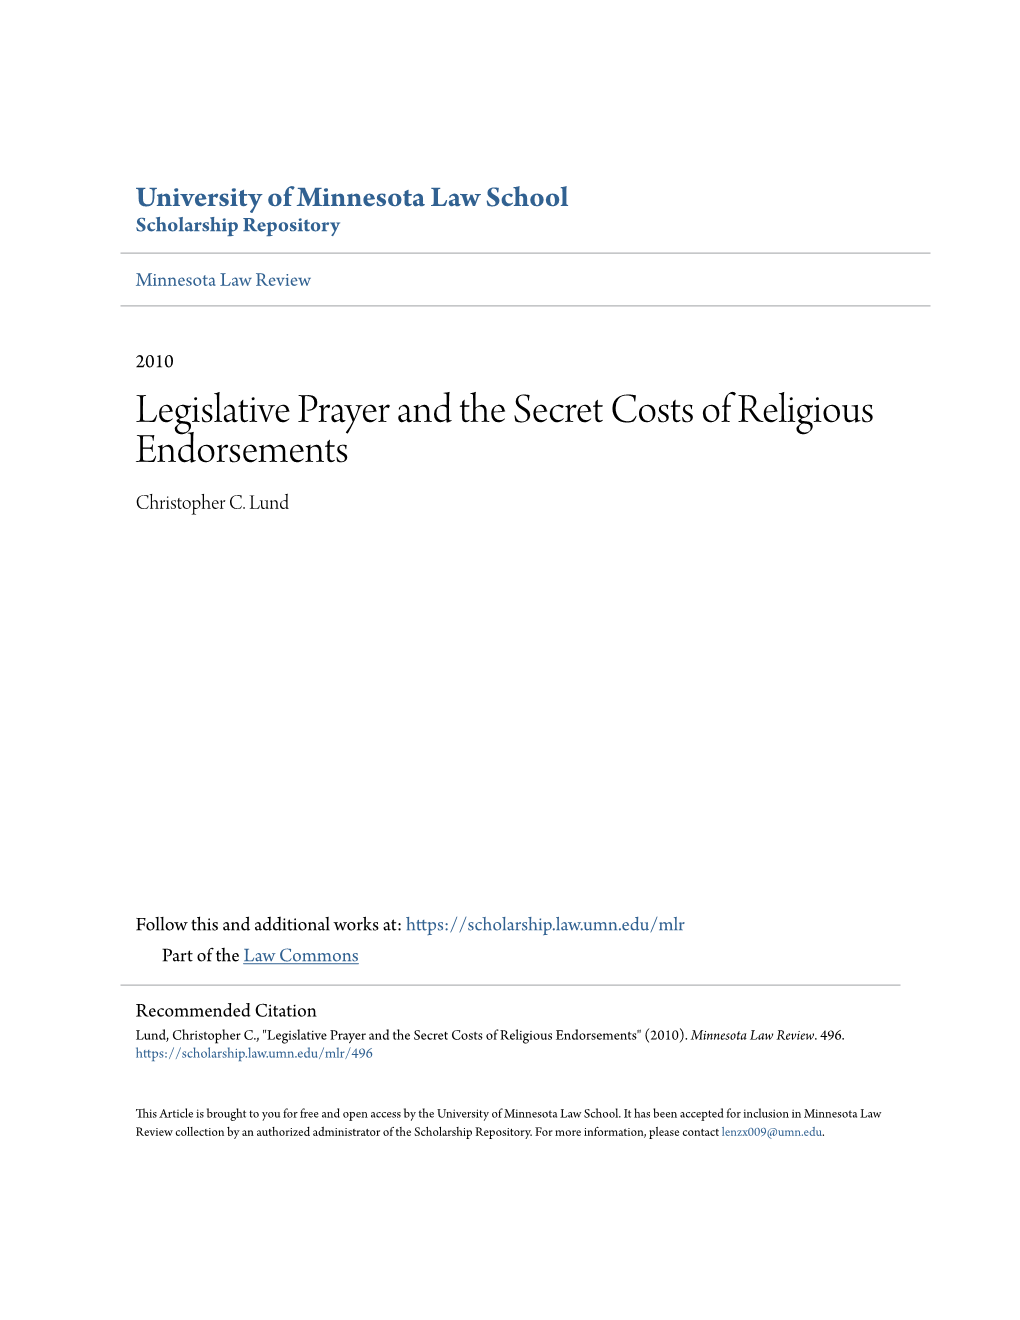 Legislative Prayer and the Secret Costs of Religious Endorsements Christopher C